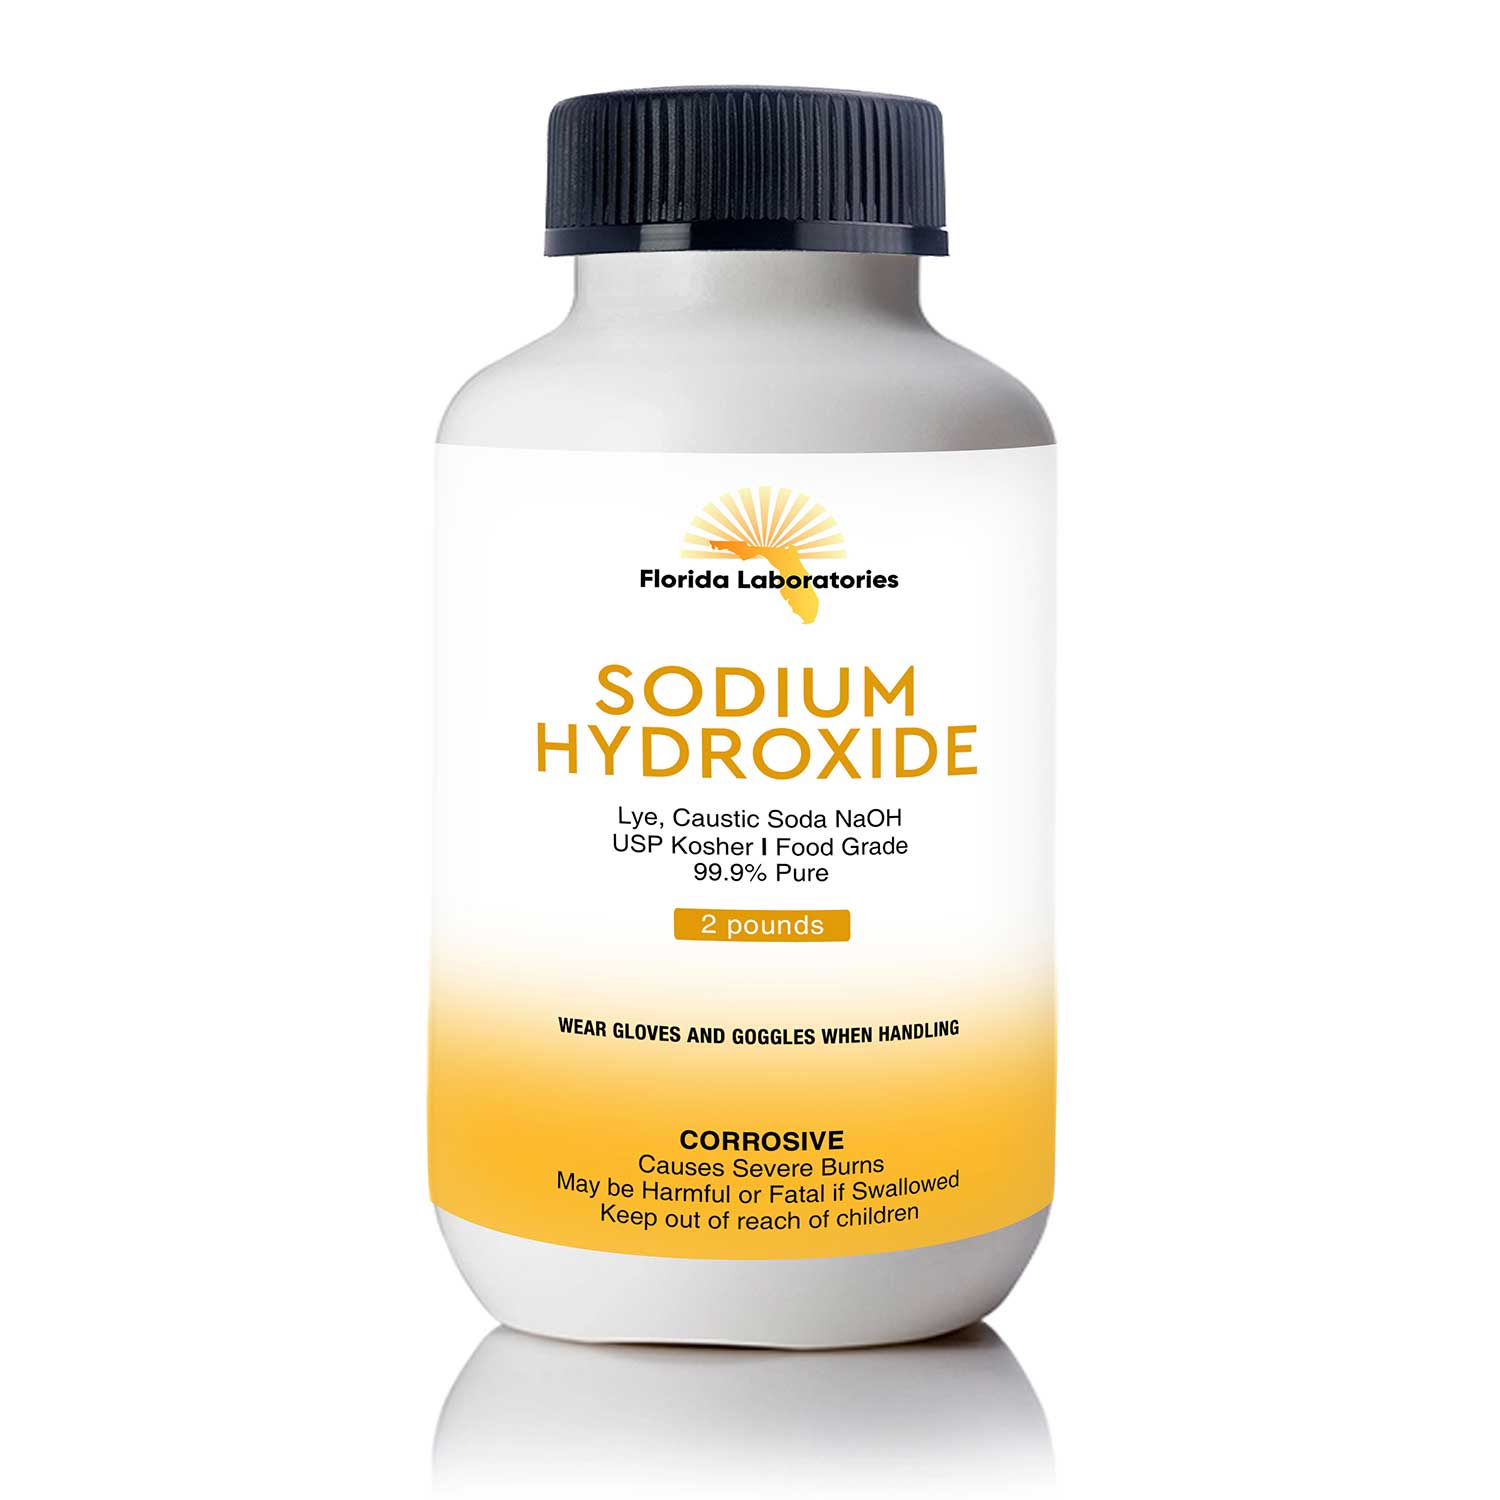 Sodium hydroxide - Sodium hydroxide